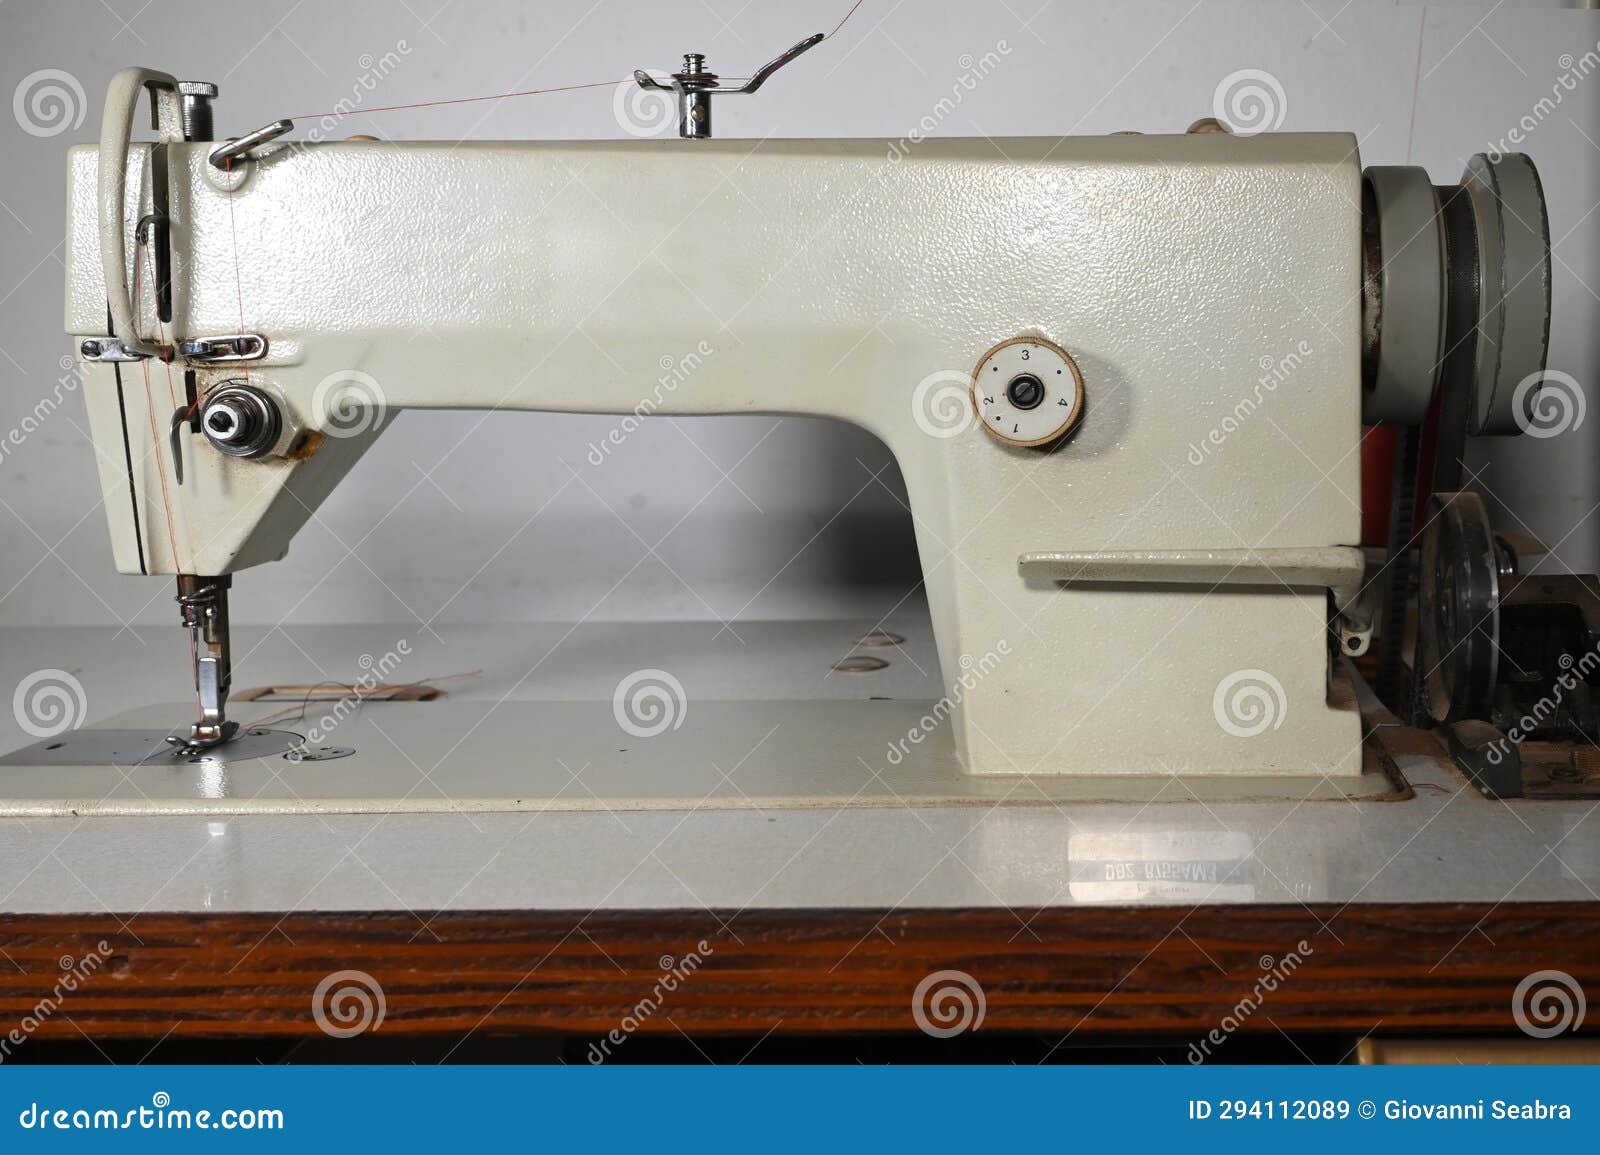 industrial sewing machine fashion clothing maquina mecanica eletrica sew fabric